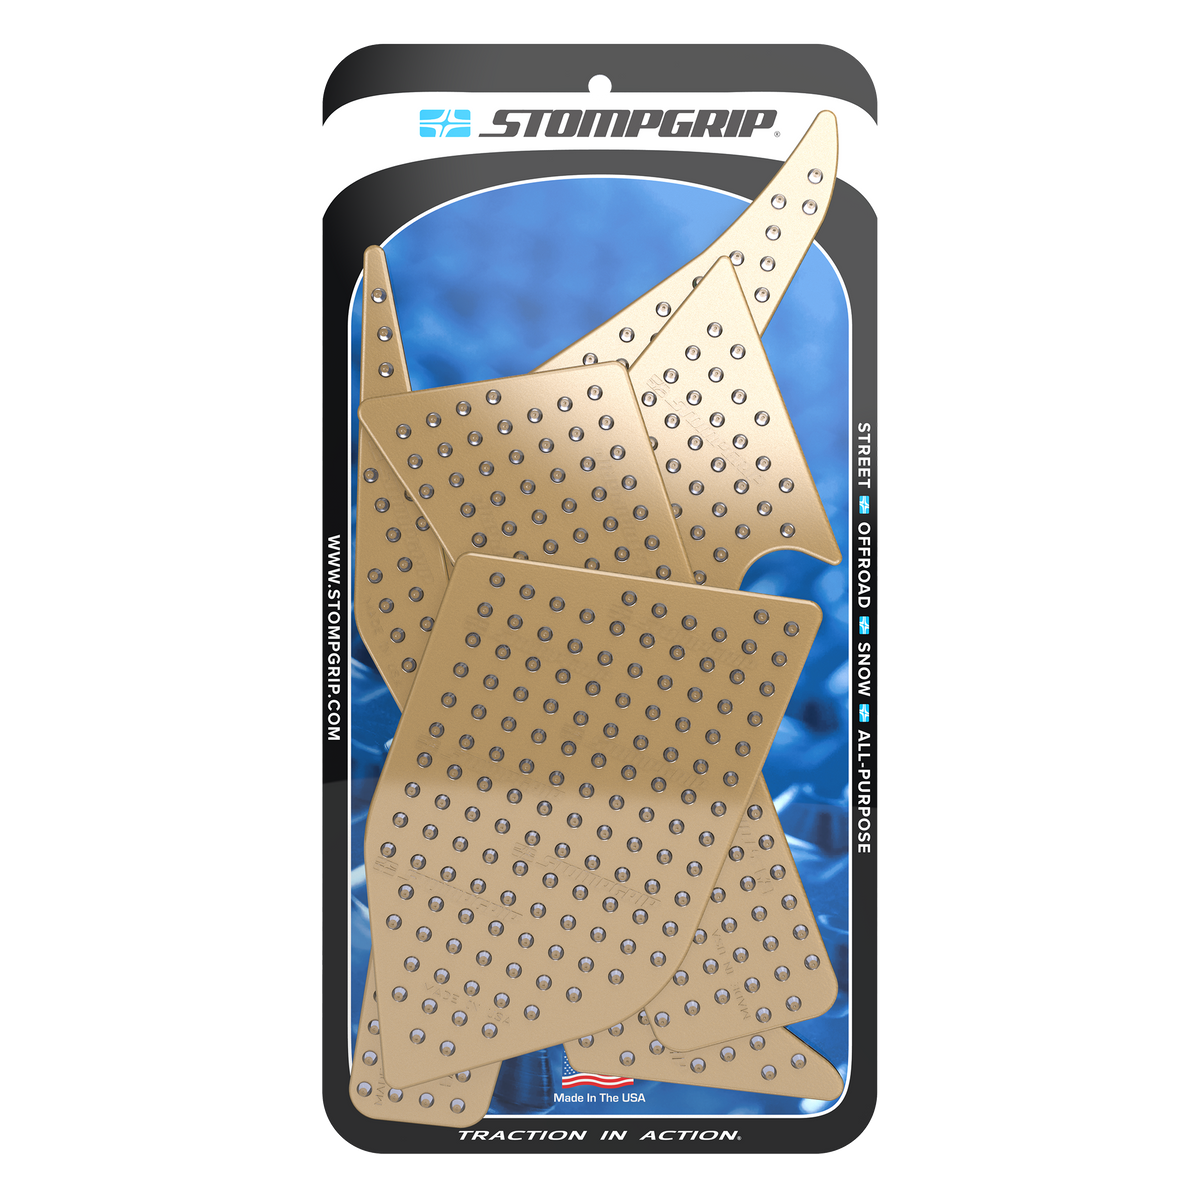 KTM 125/150/250 SX 19-22 Dirt Bike 3D Griptape Kit (0081)